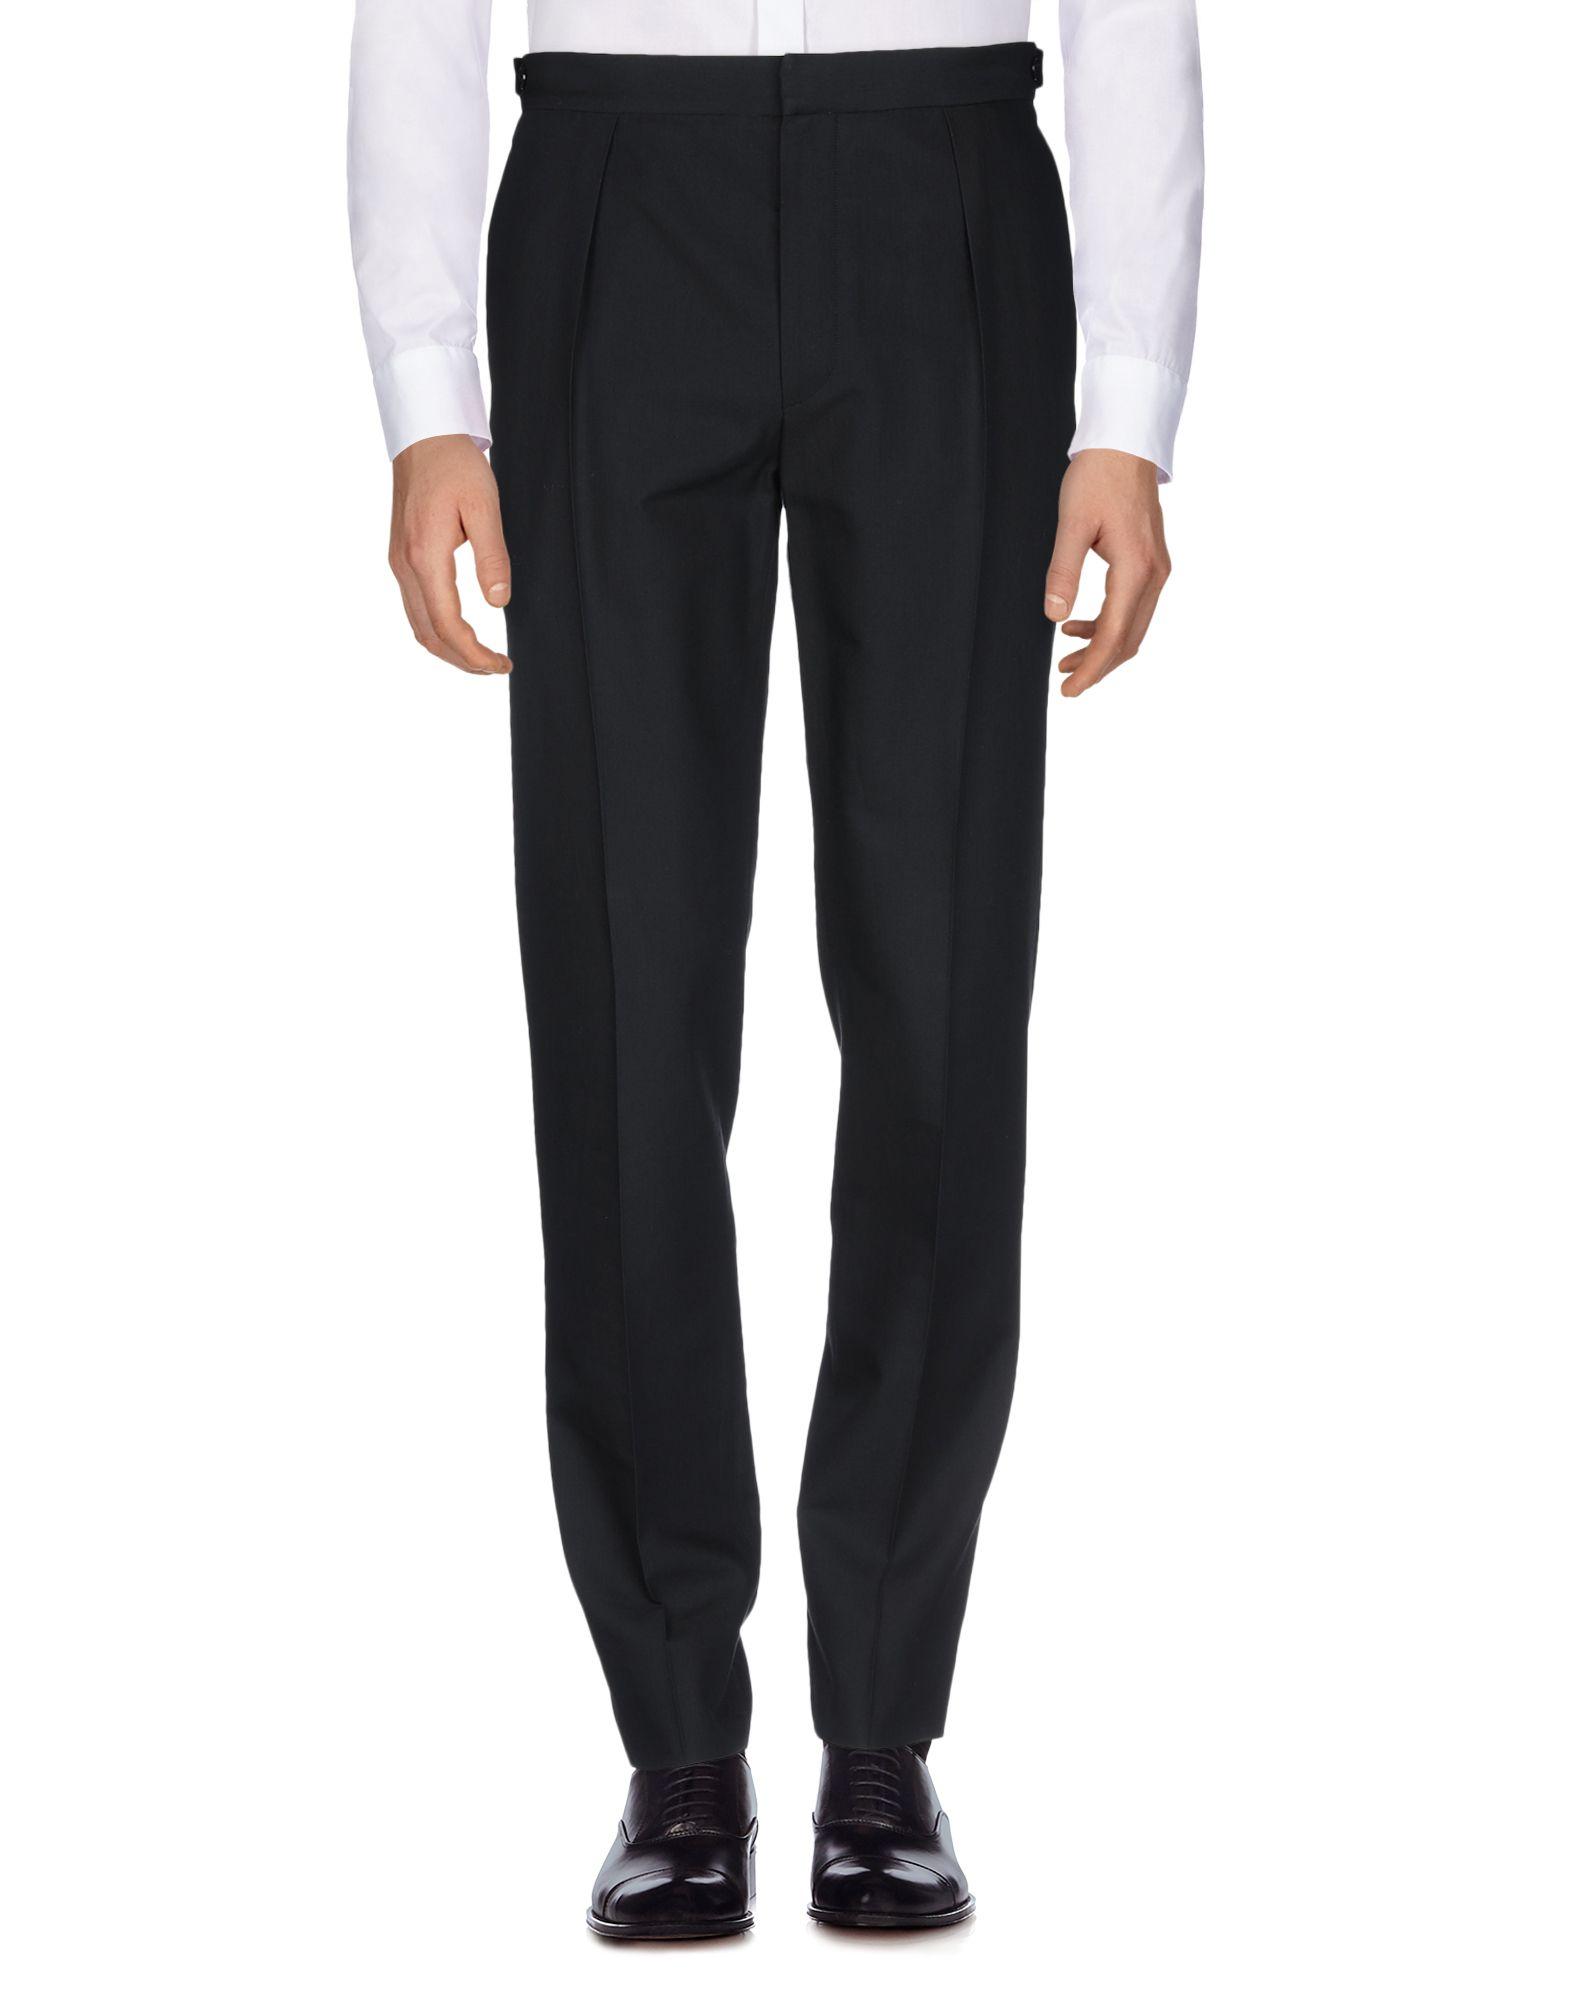 Bottega Veneta Wool Casual Pants in Black for Men - Lyst